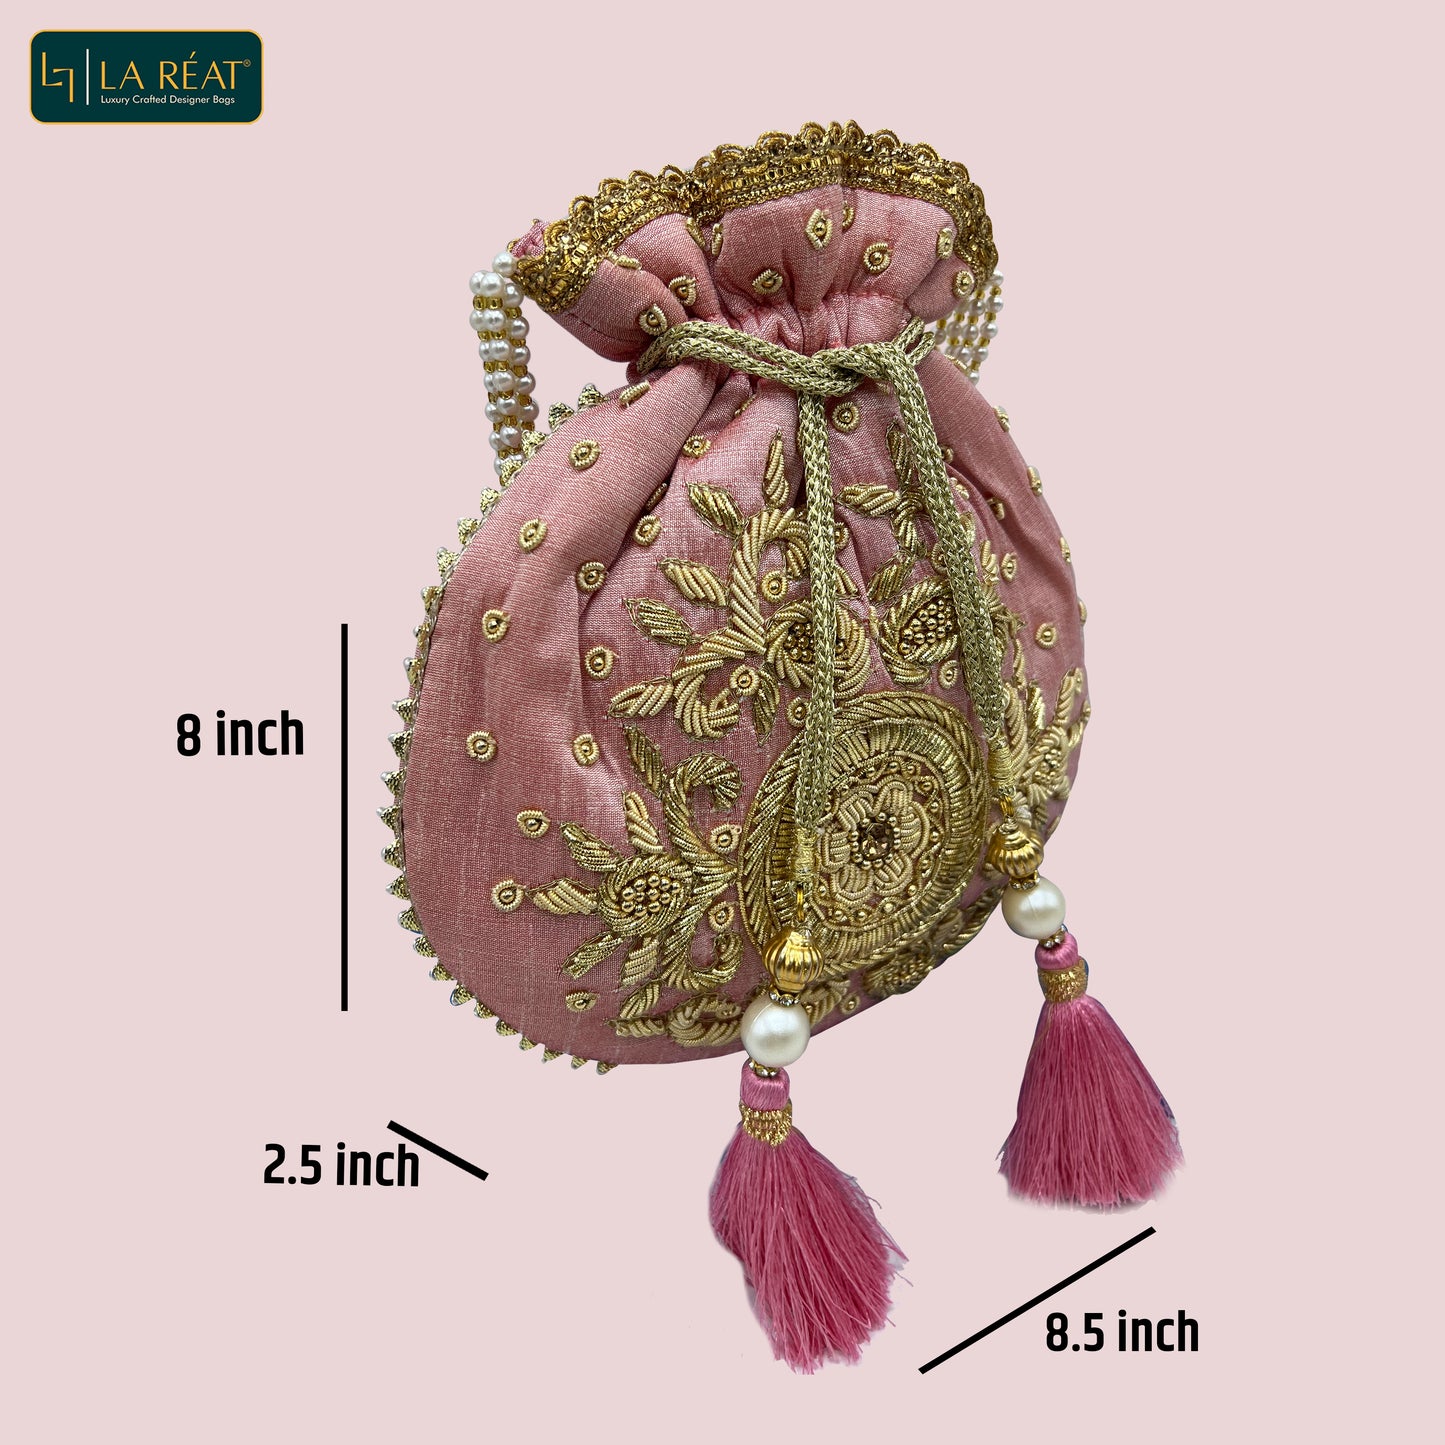 La Reat's Kora Women's Bridal Fancy Party Hand Embroidery Potli Bags, Ladies Purse Wallets, Evening Clutches, Handbags.-Kora-Rose Gold